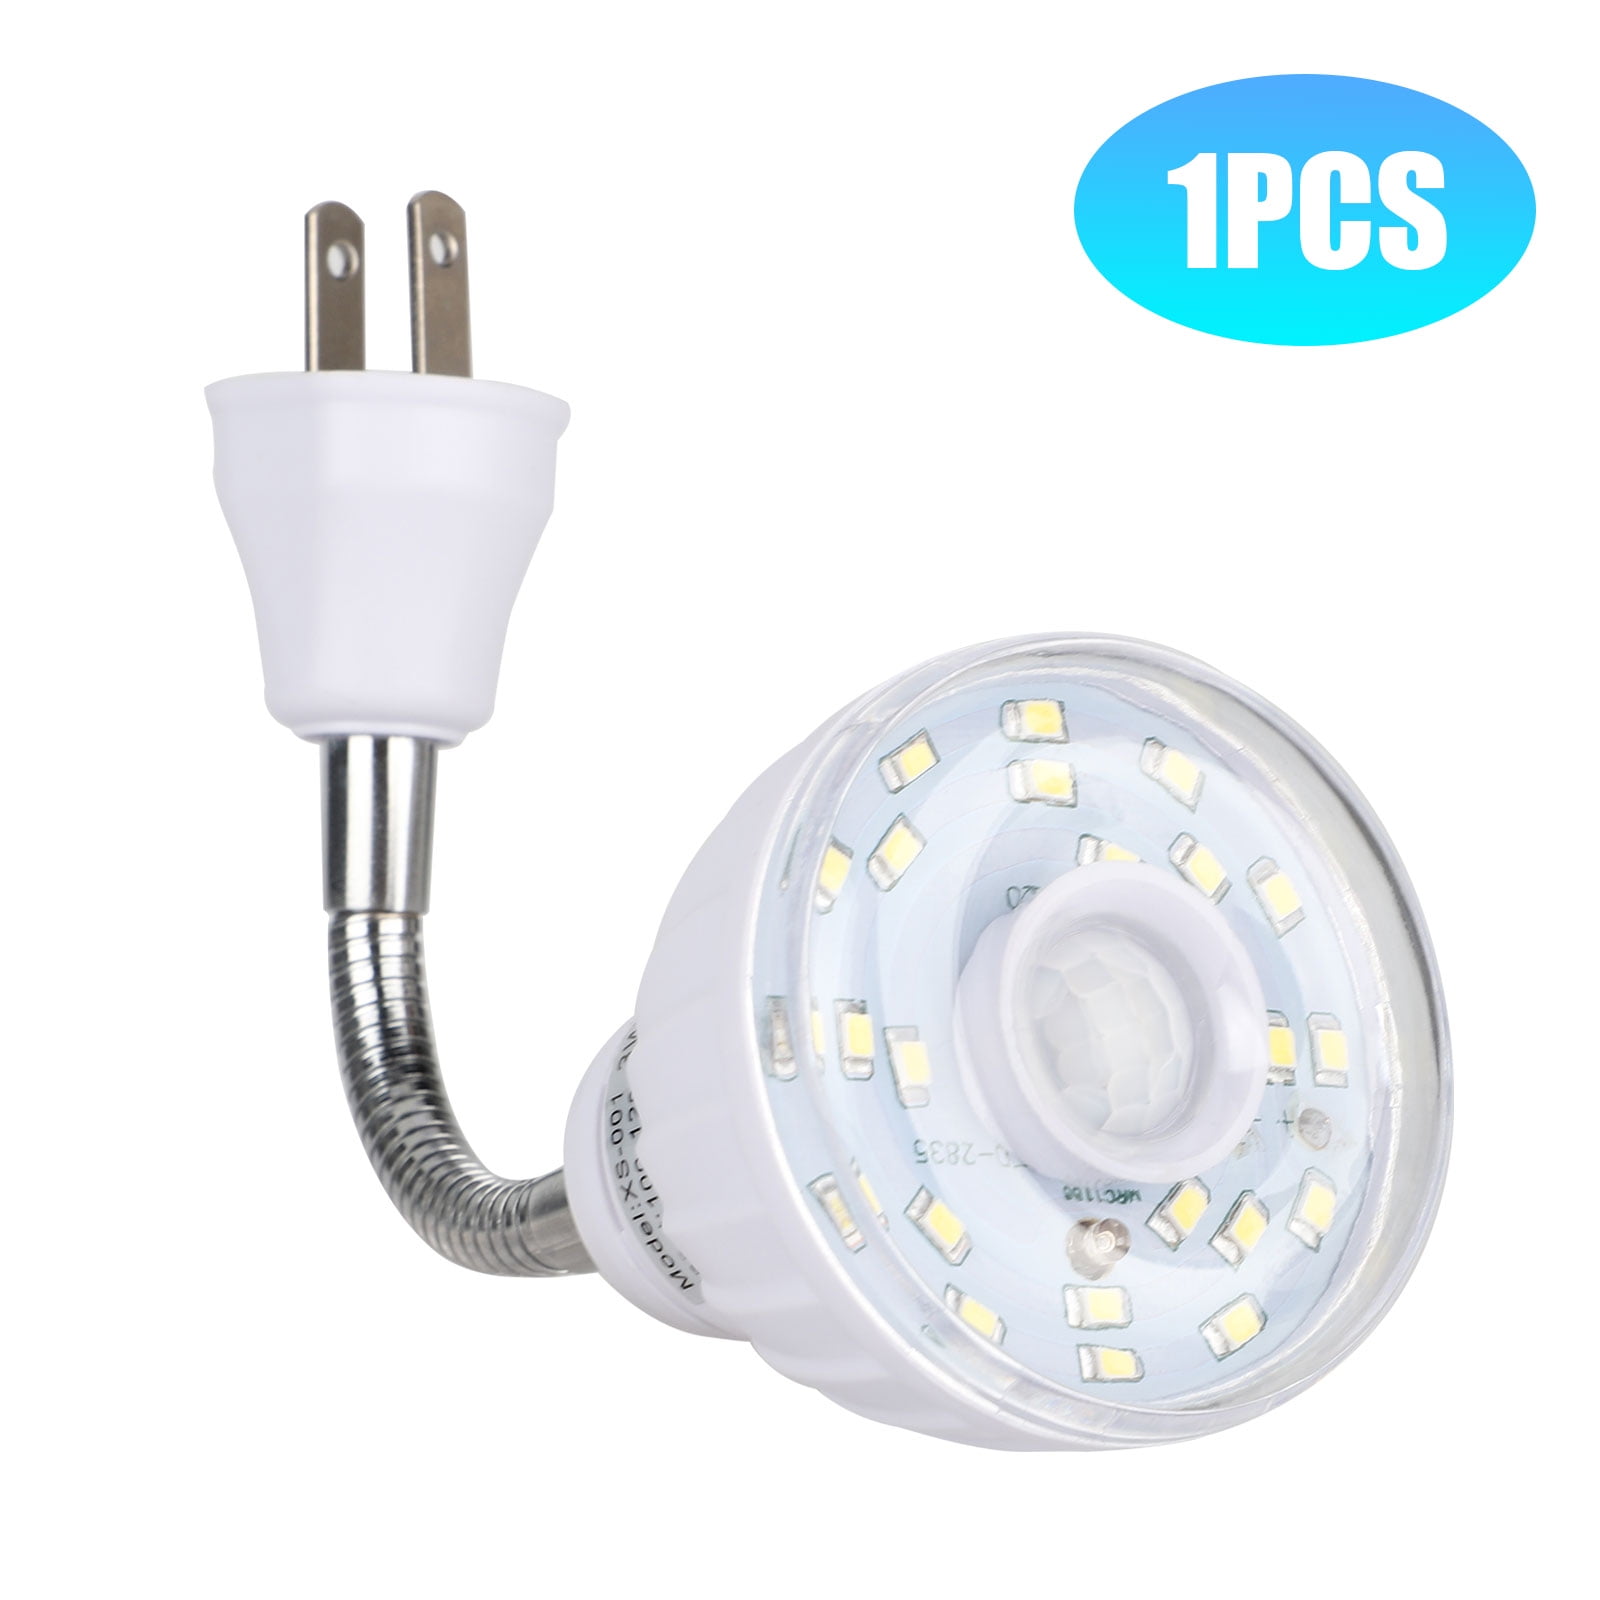 2 In 1 LED Night Light Plug In Auto Sensor Energy Saving Children Nursery Safety 